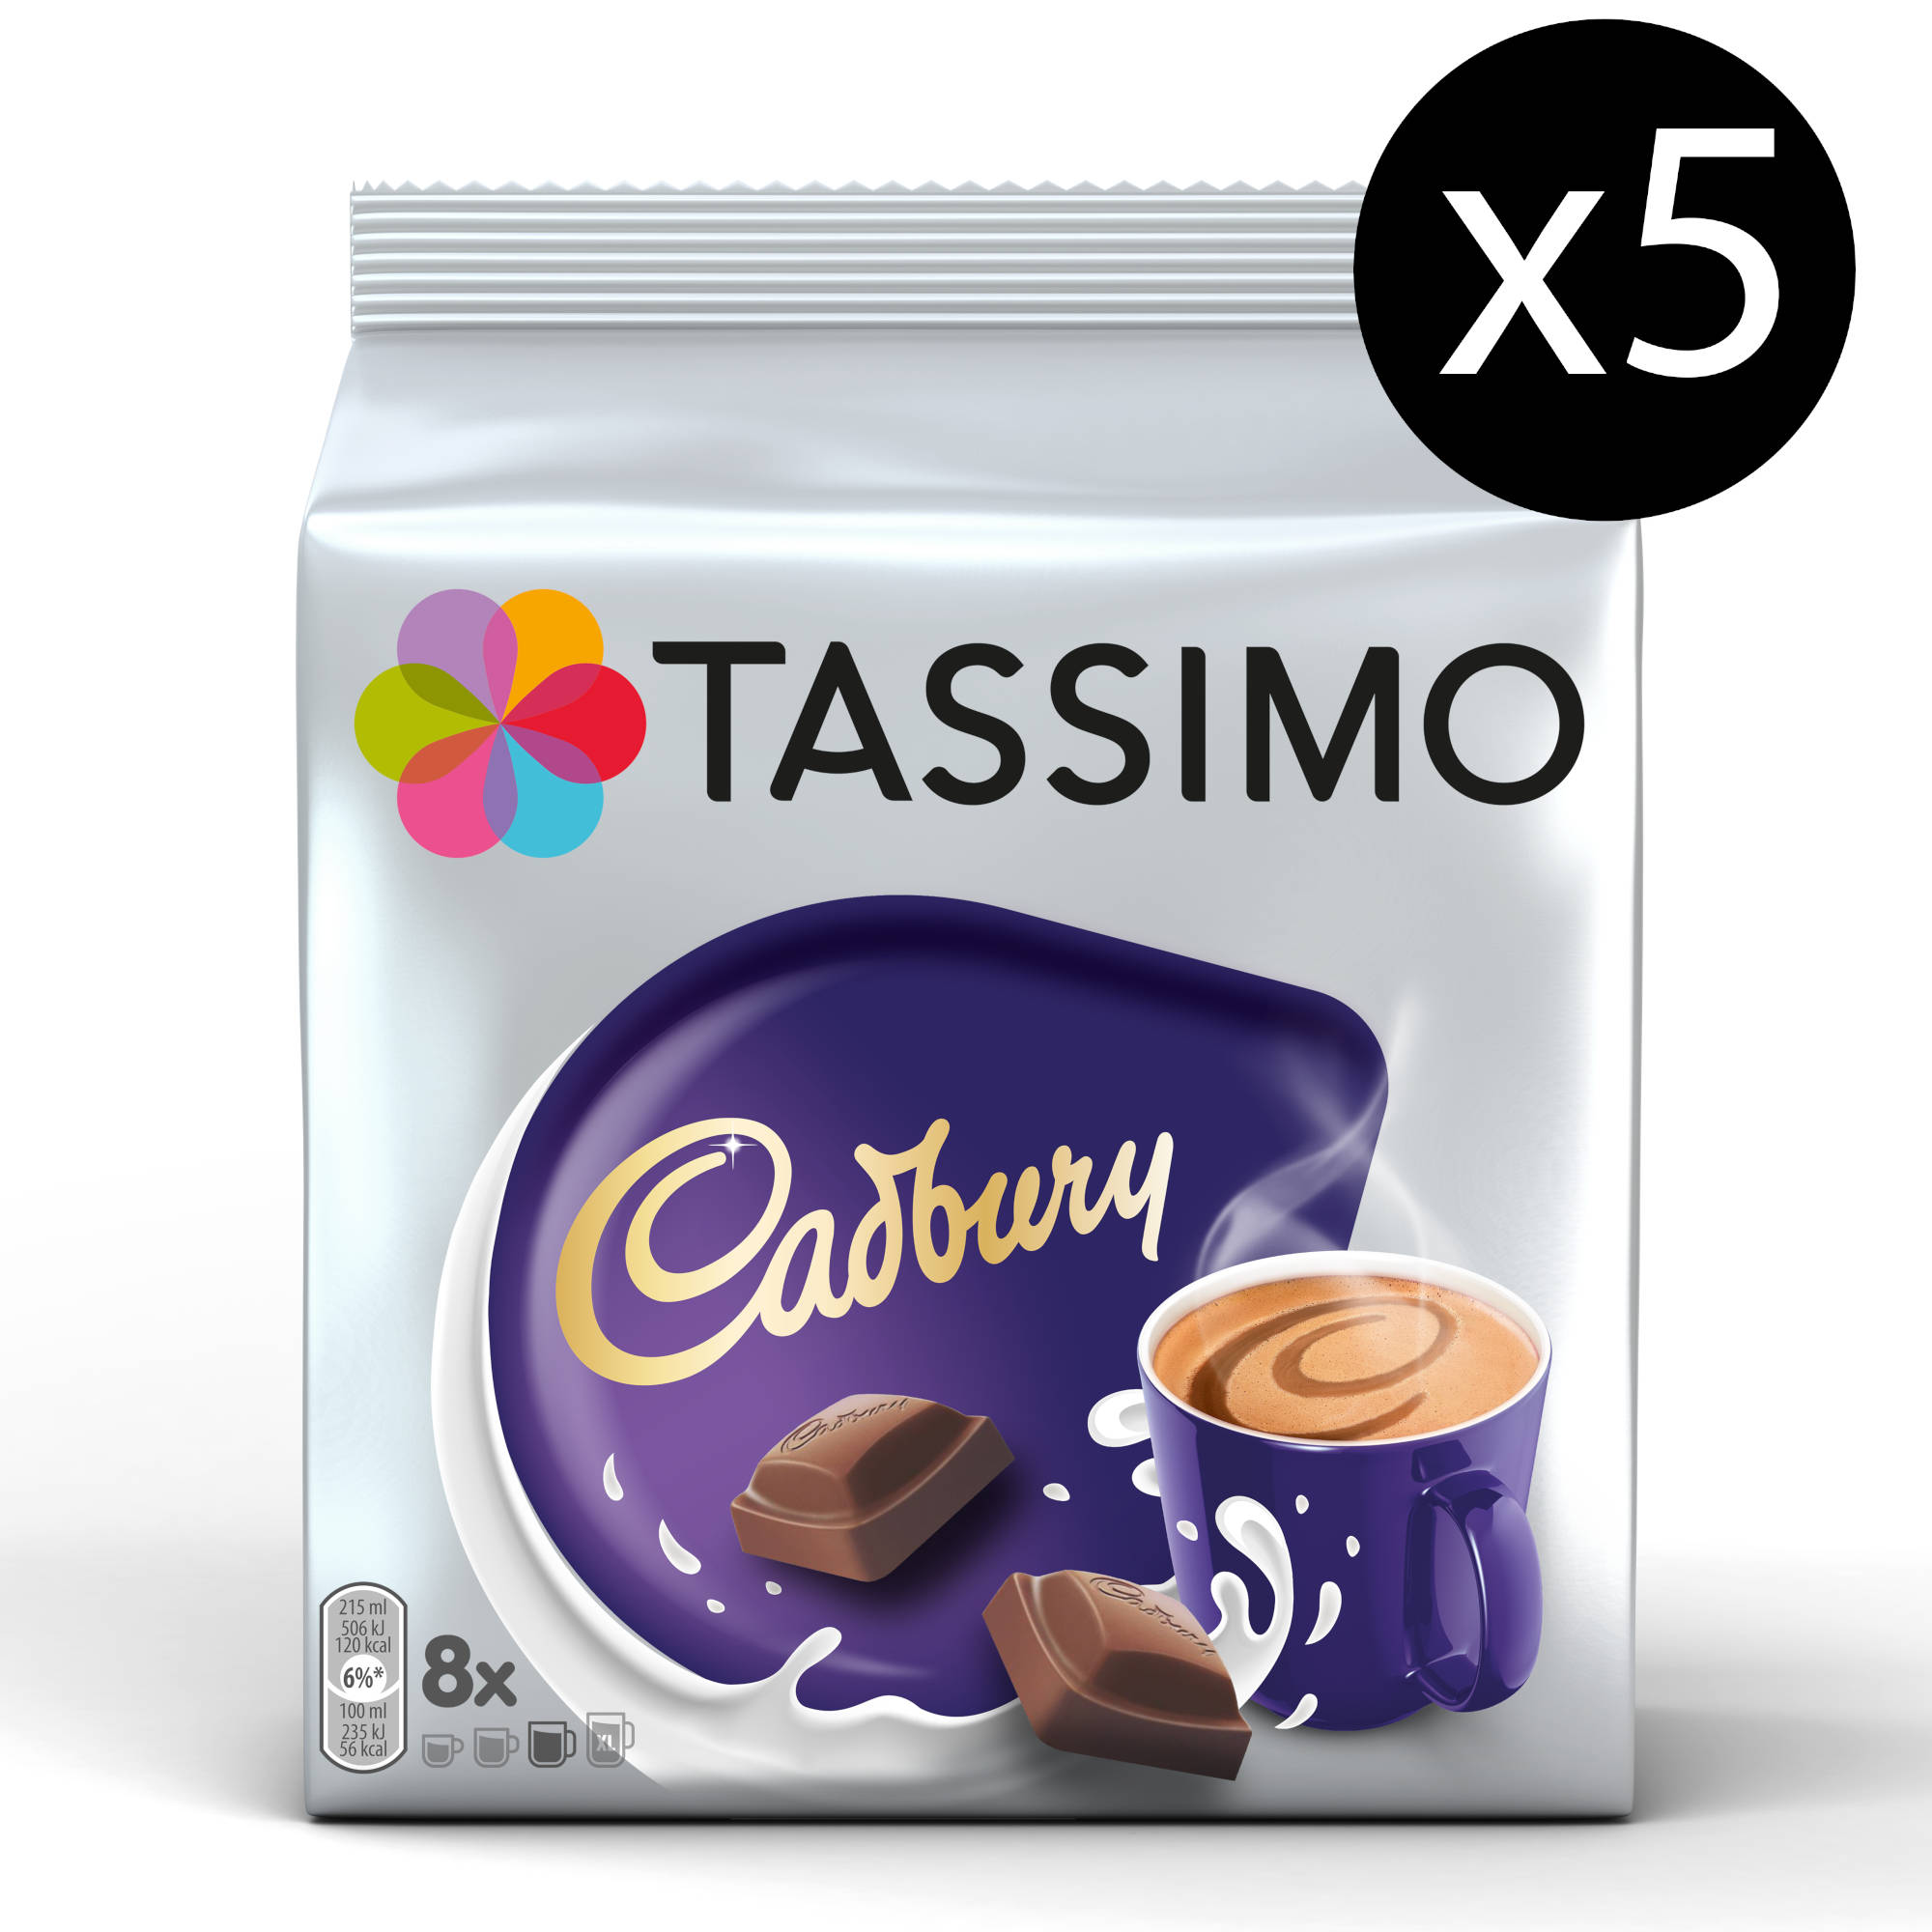 TASSIMO Cadbury (T-Disc Chocolate 8 5 T (Tassimo Maschine Discs Getränke System)) Hot Kakaokapseln x